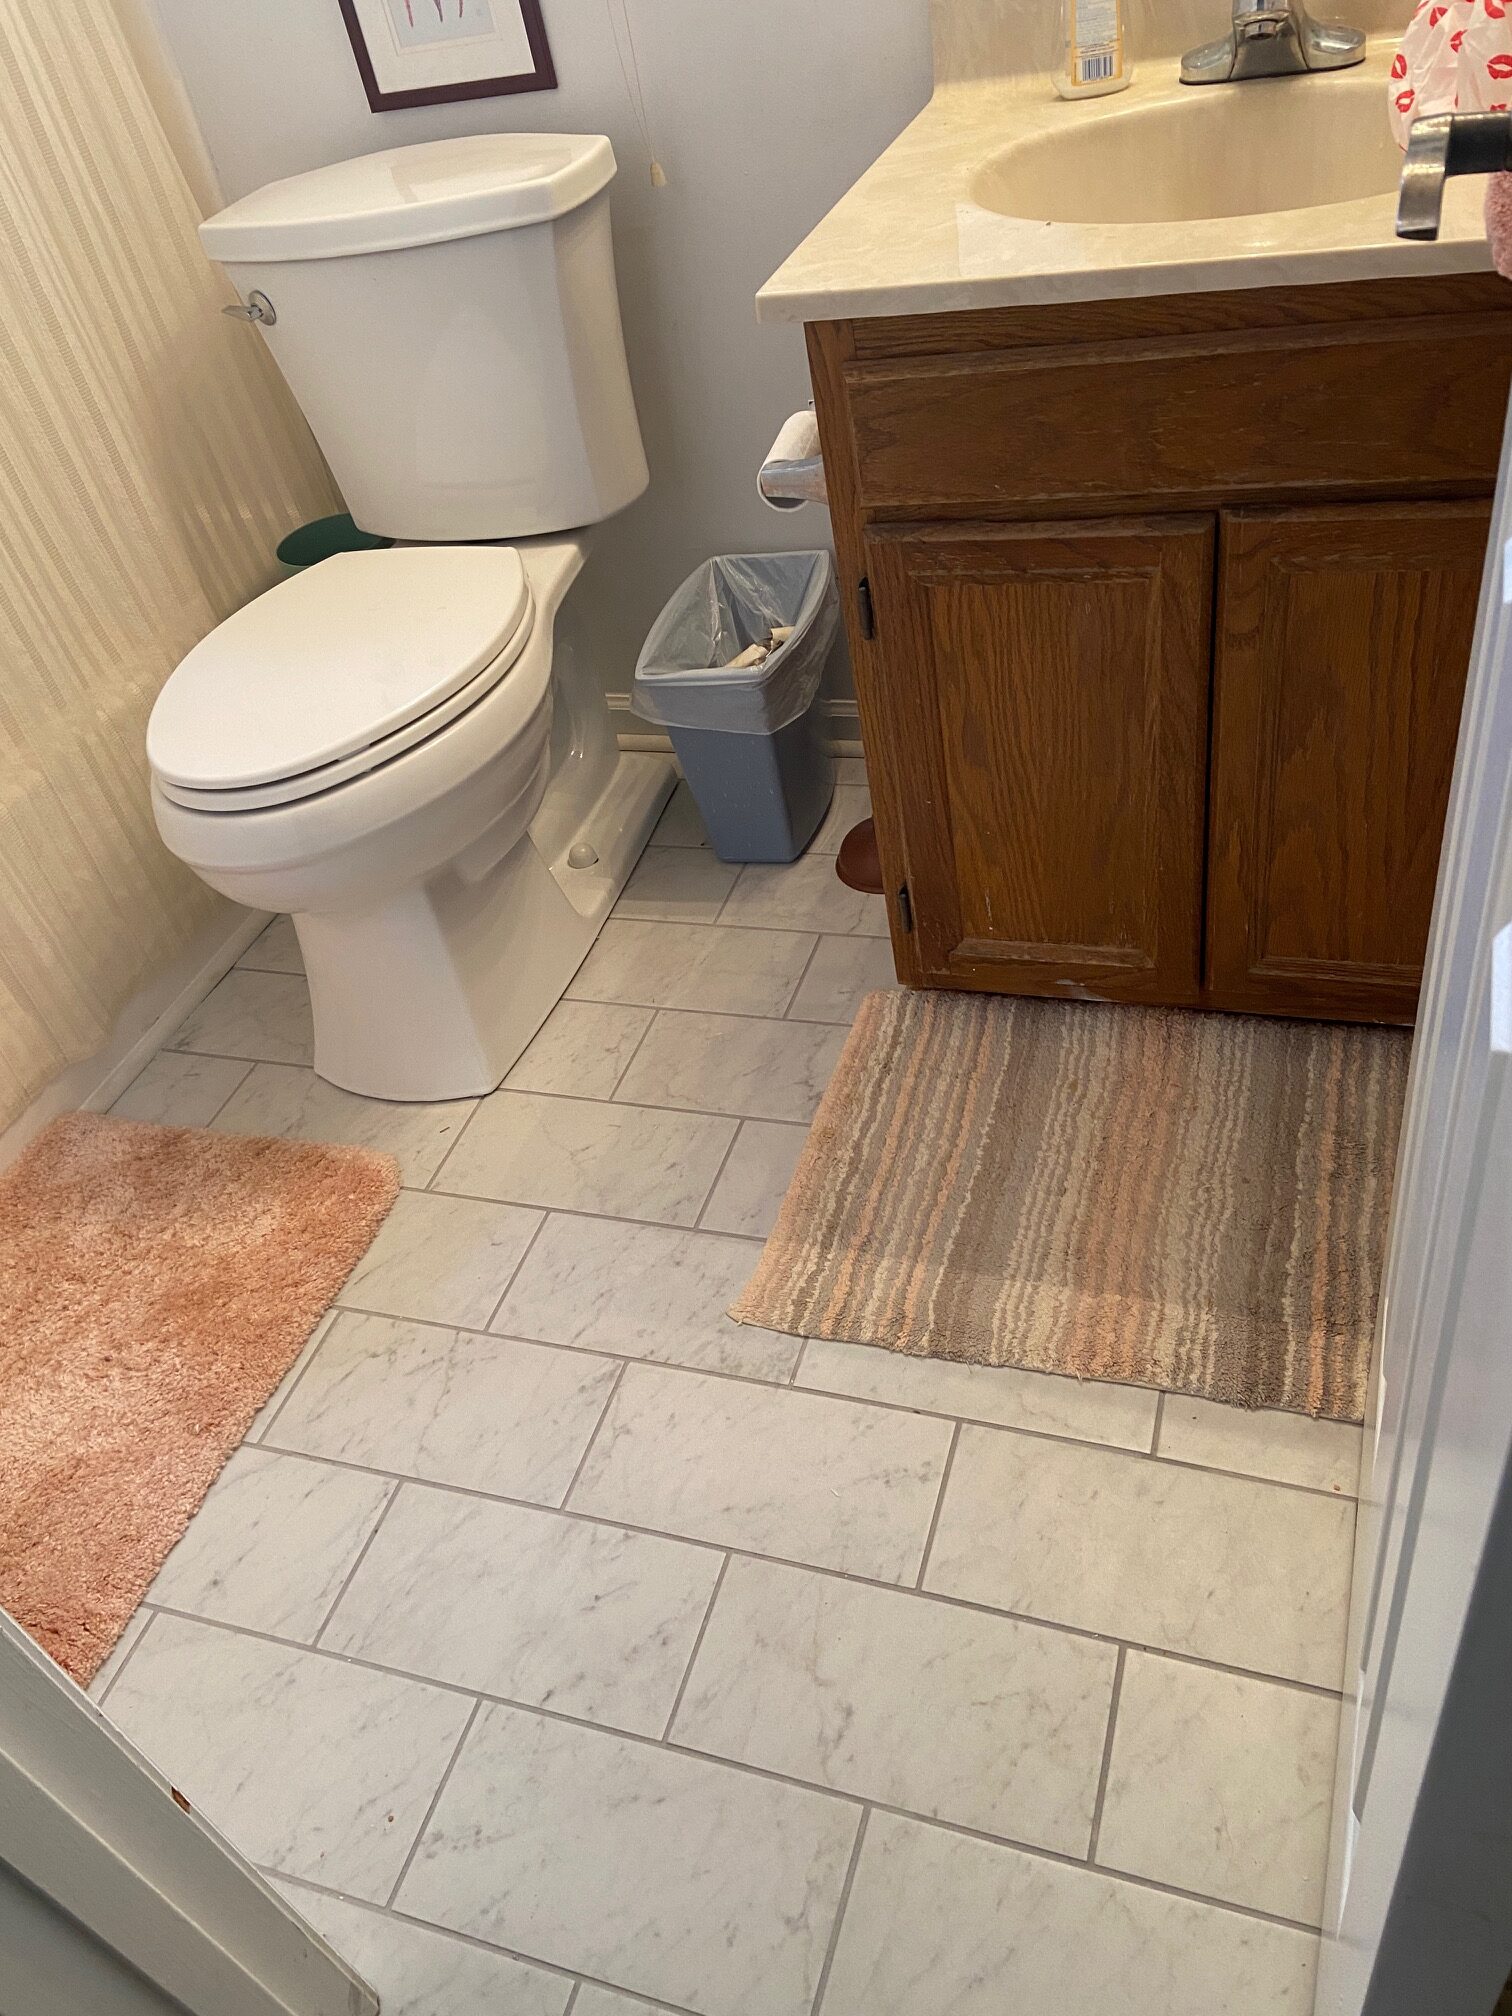 new tile bathroom